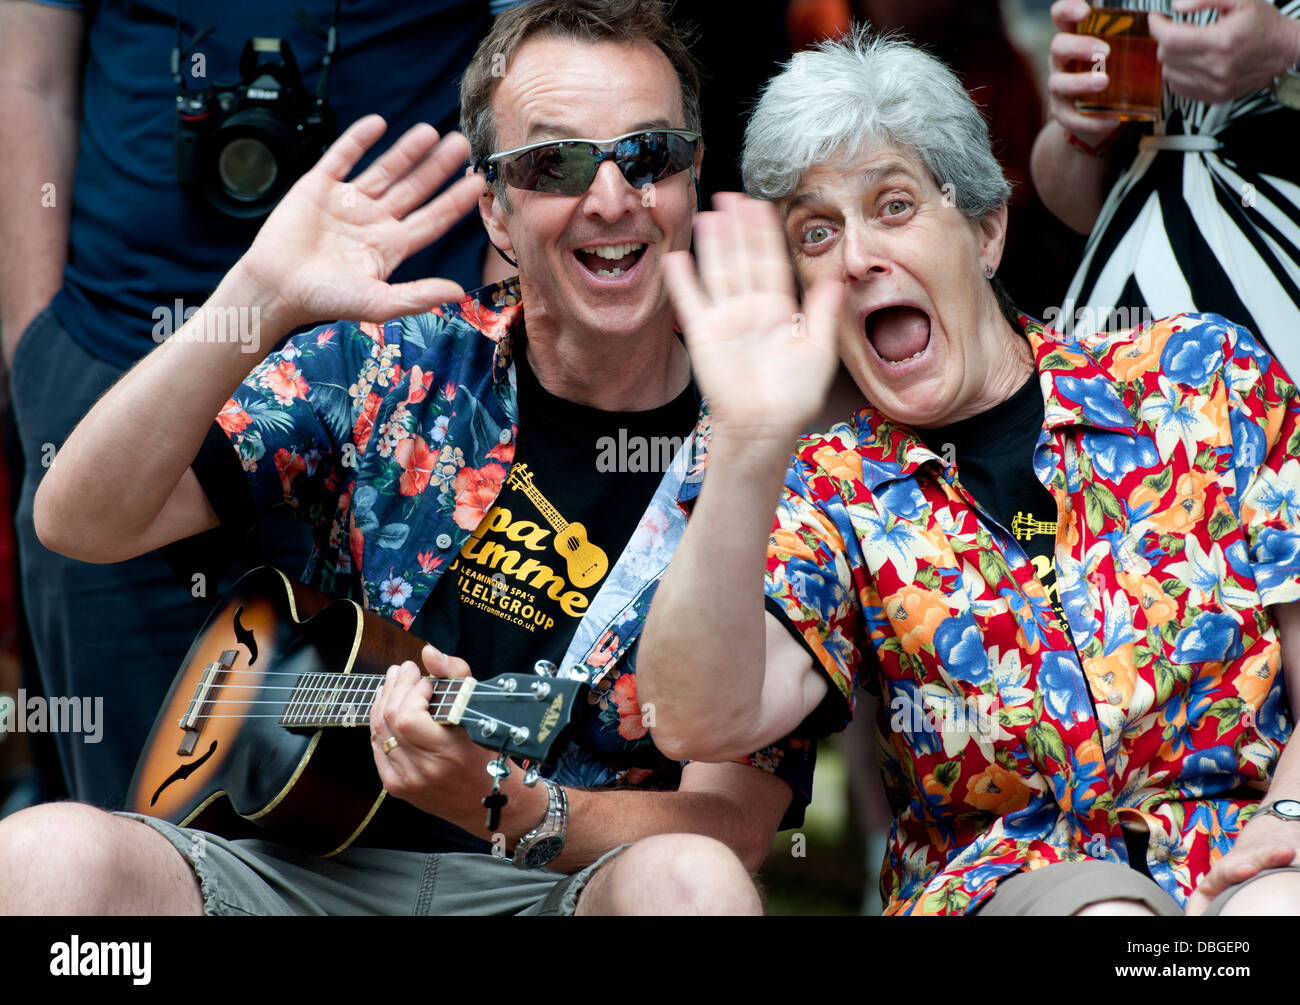 People at a ukulele festival wearing colourul shirts and waving. Stock Photo